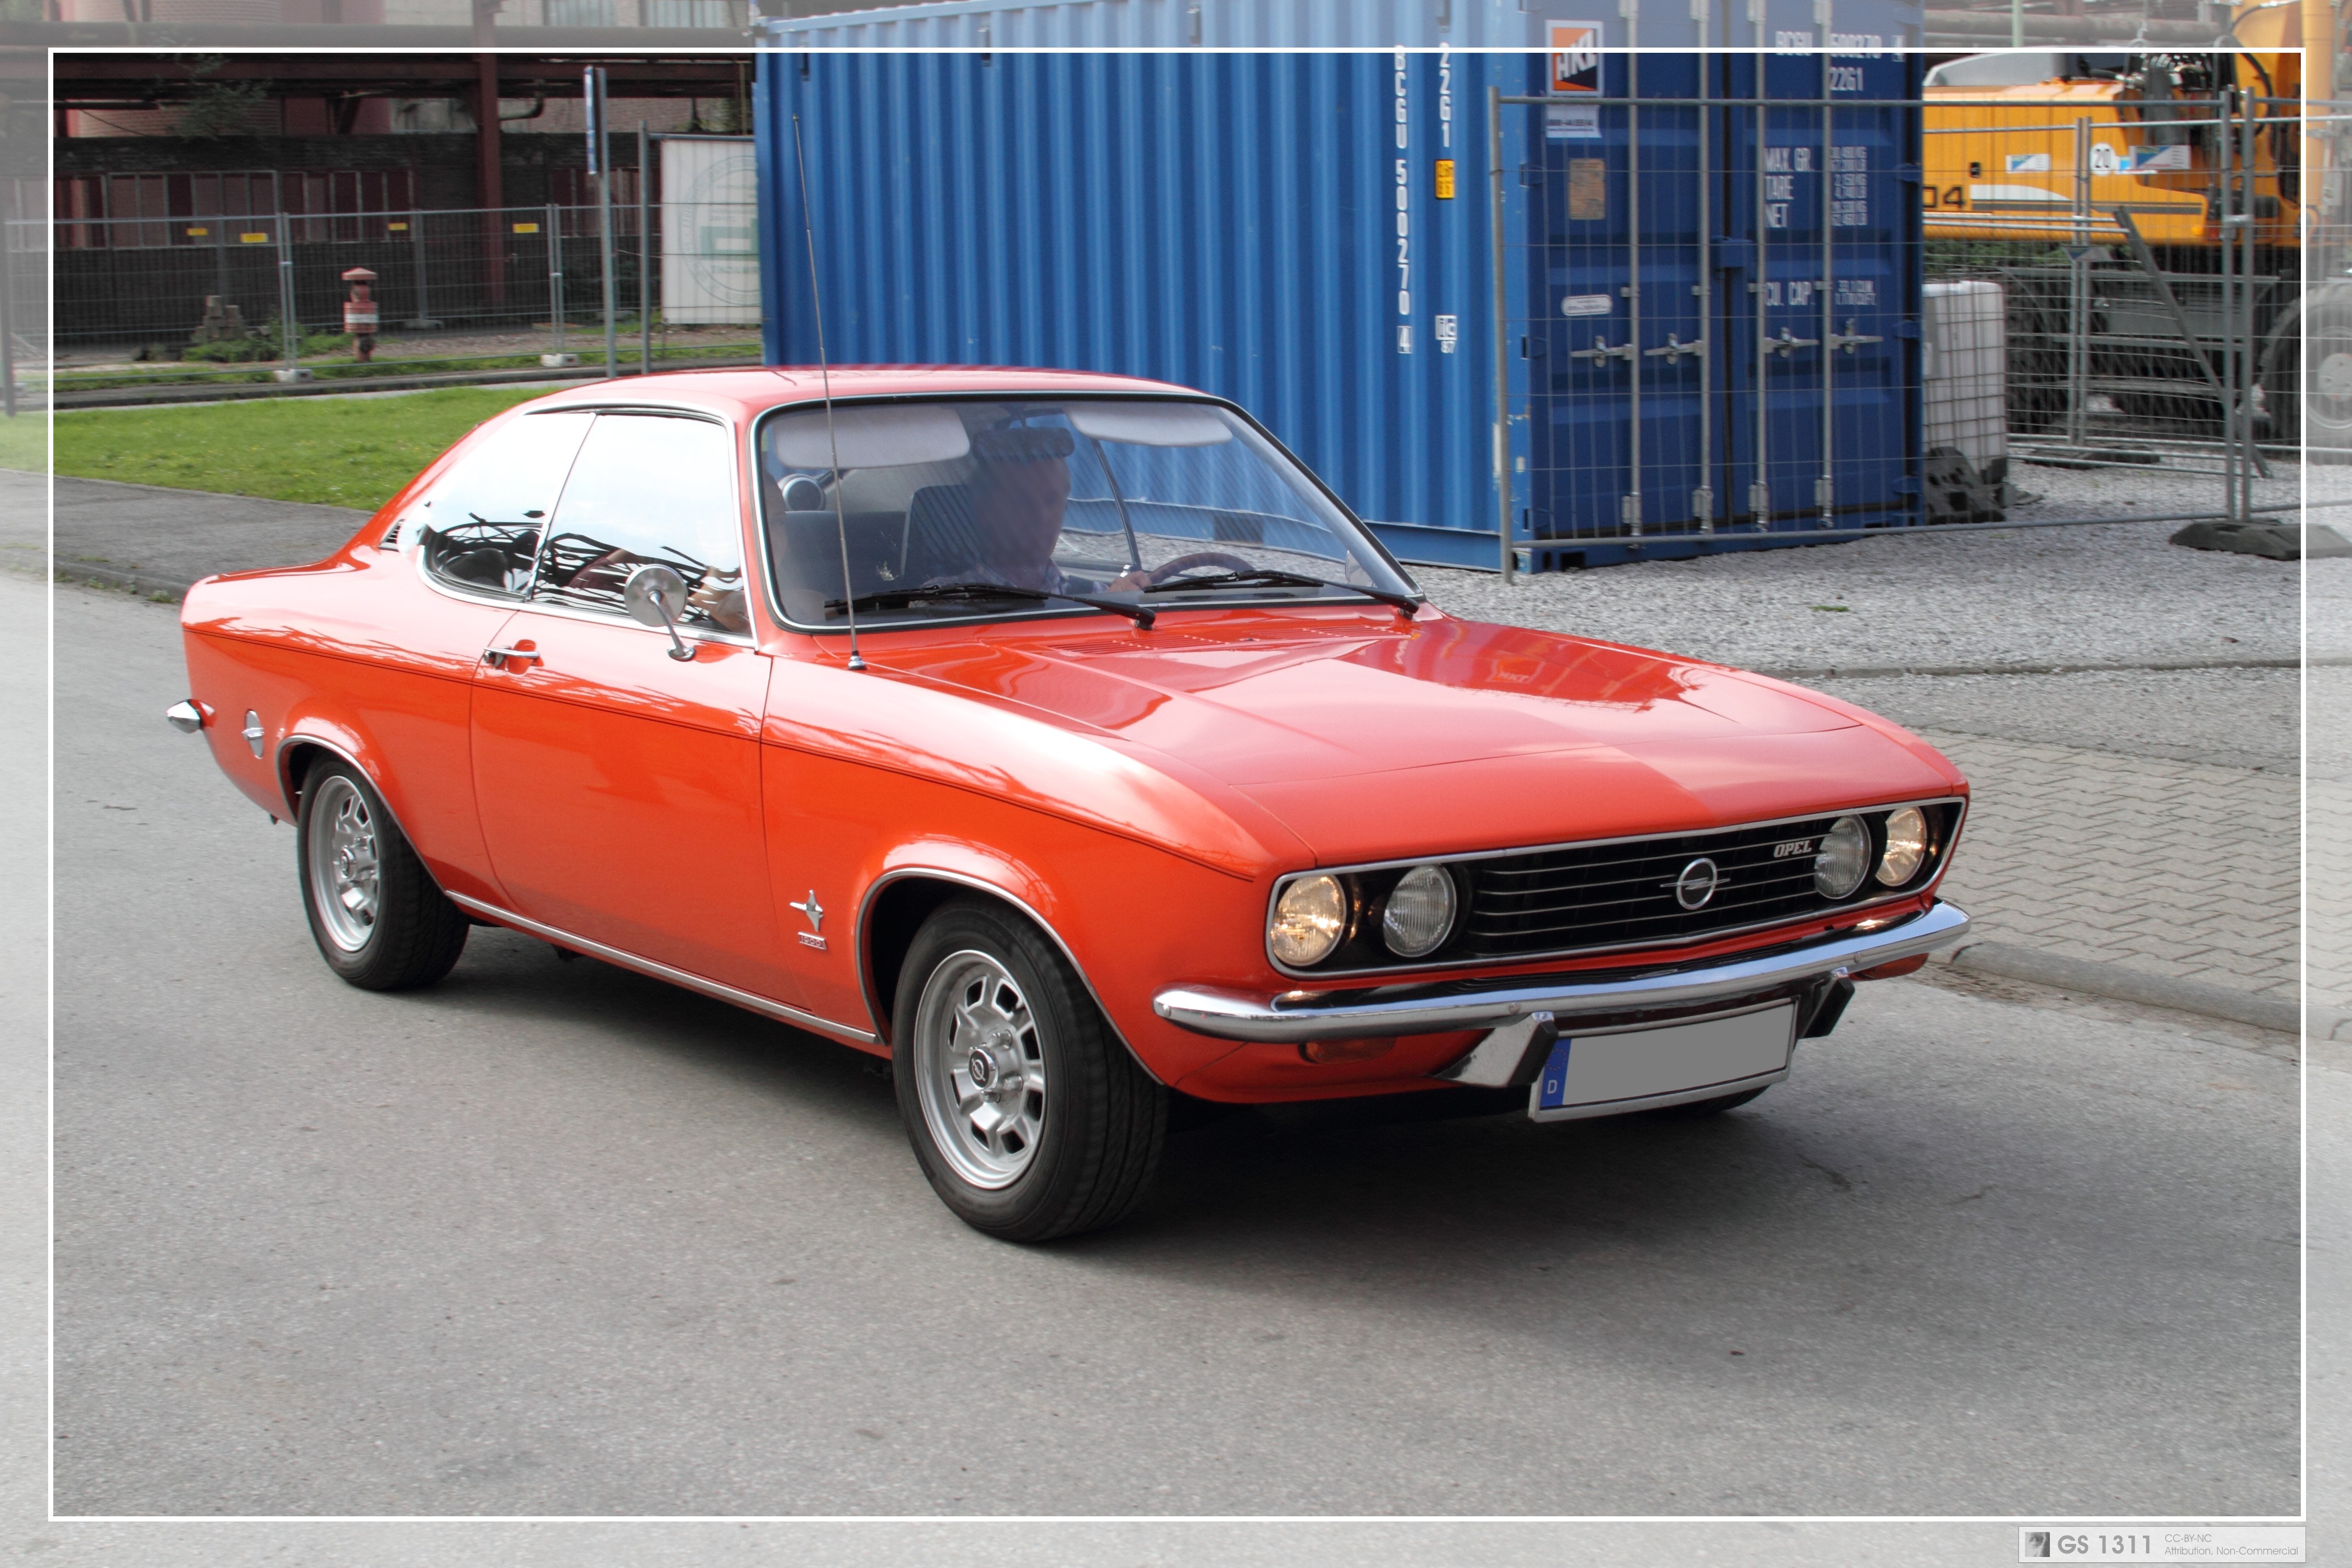 1970 - 1975 Opel Manta A (02) | Flickr - Photo Sharing!